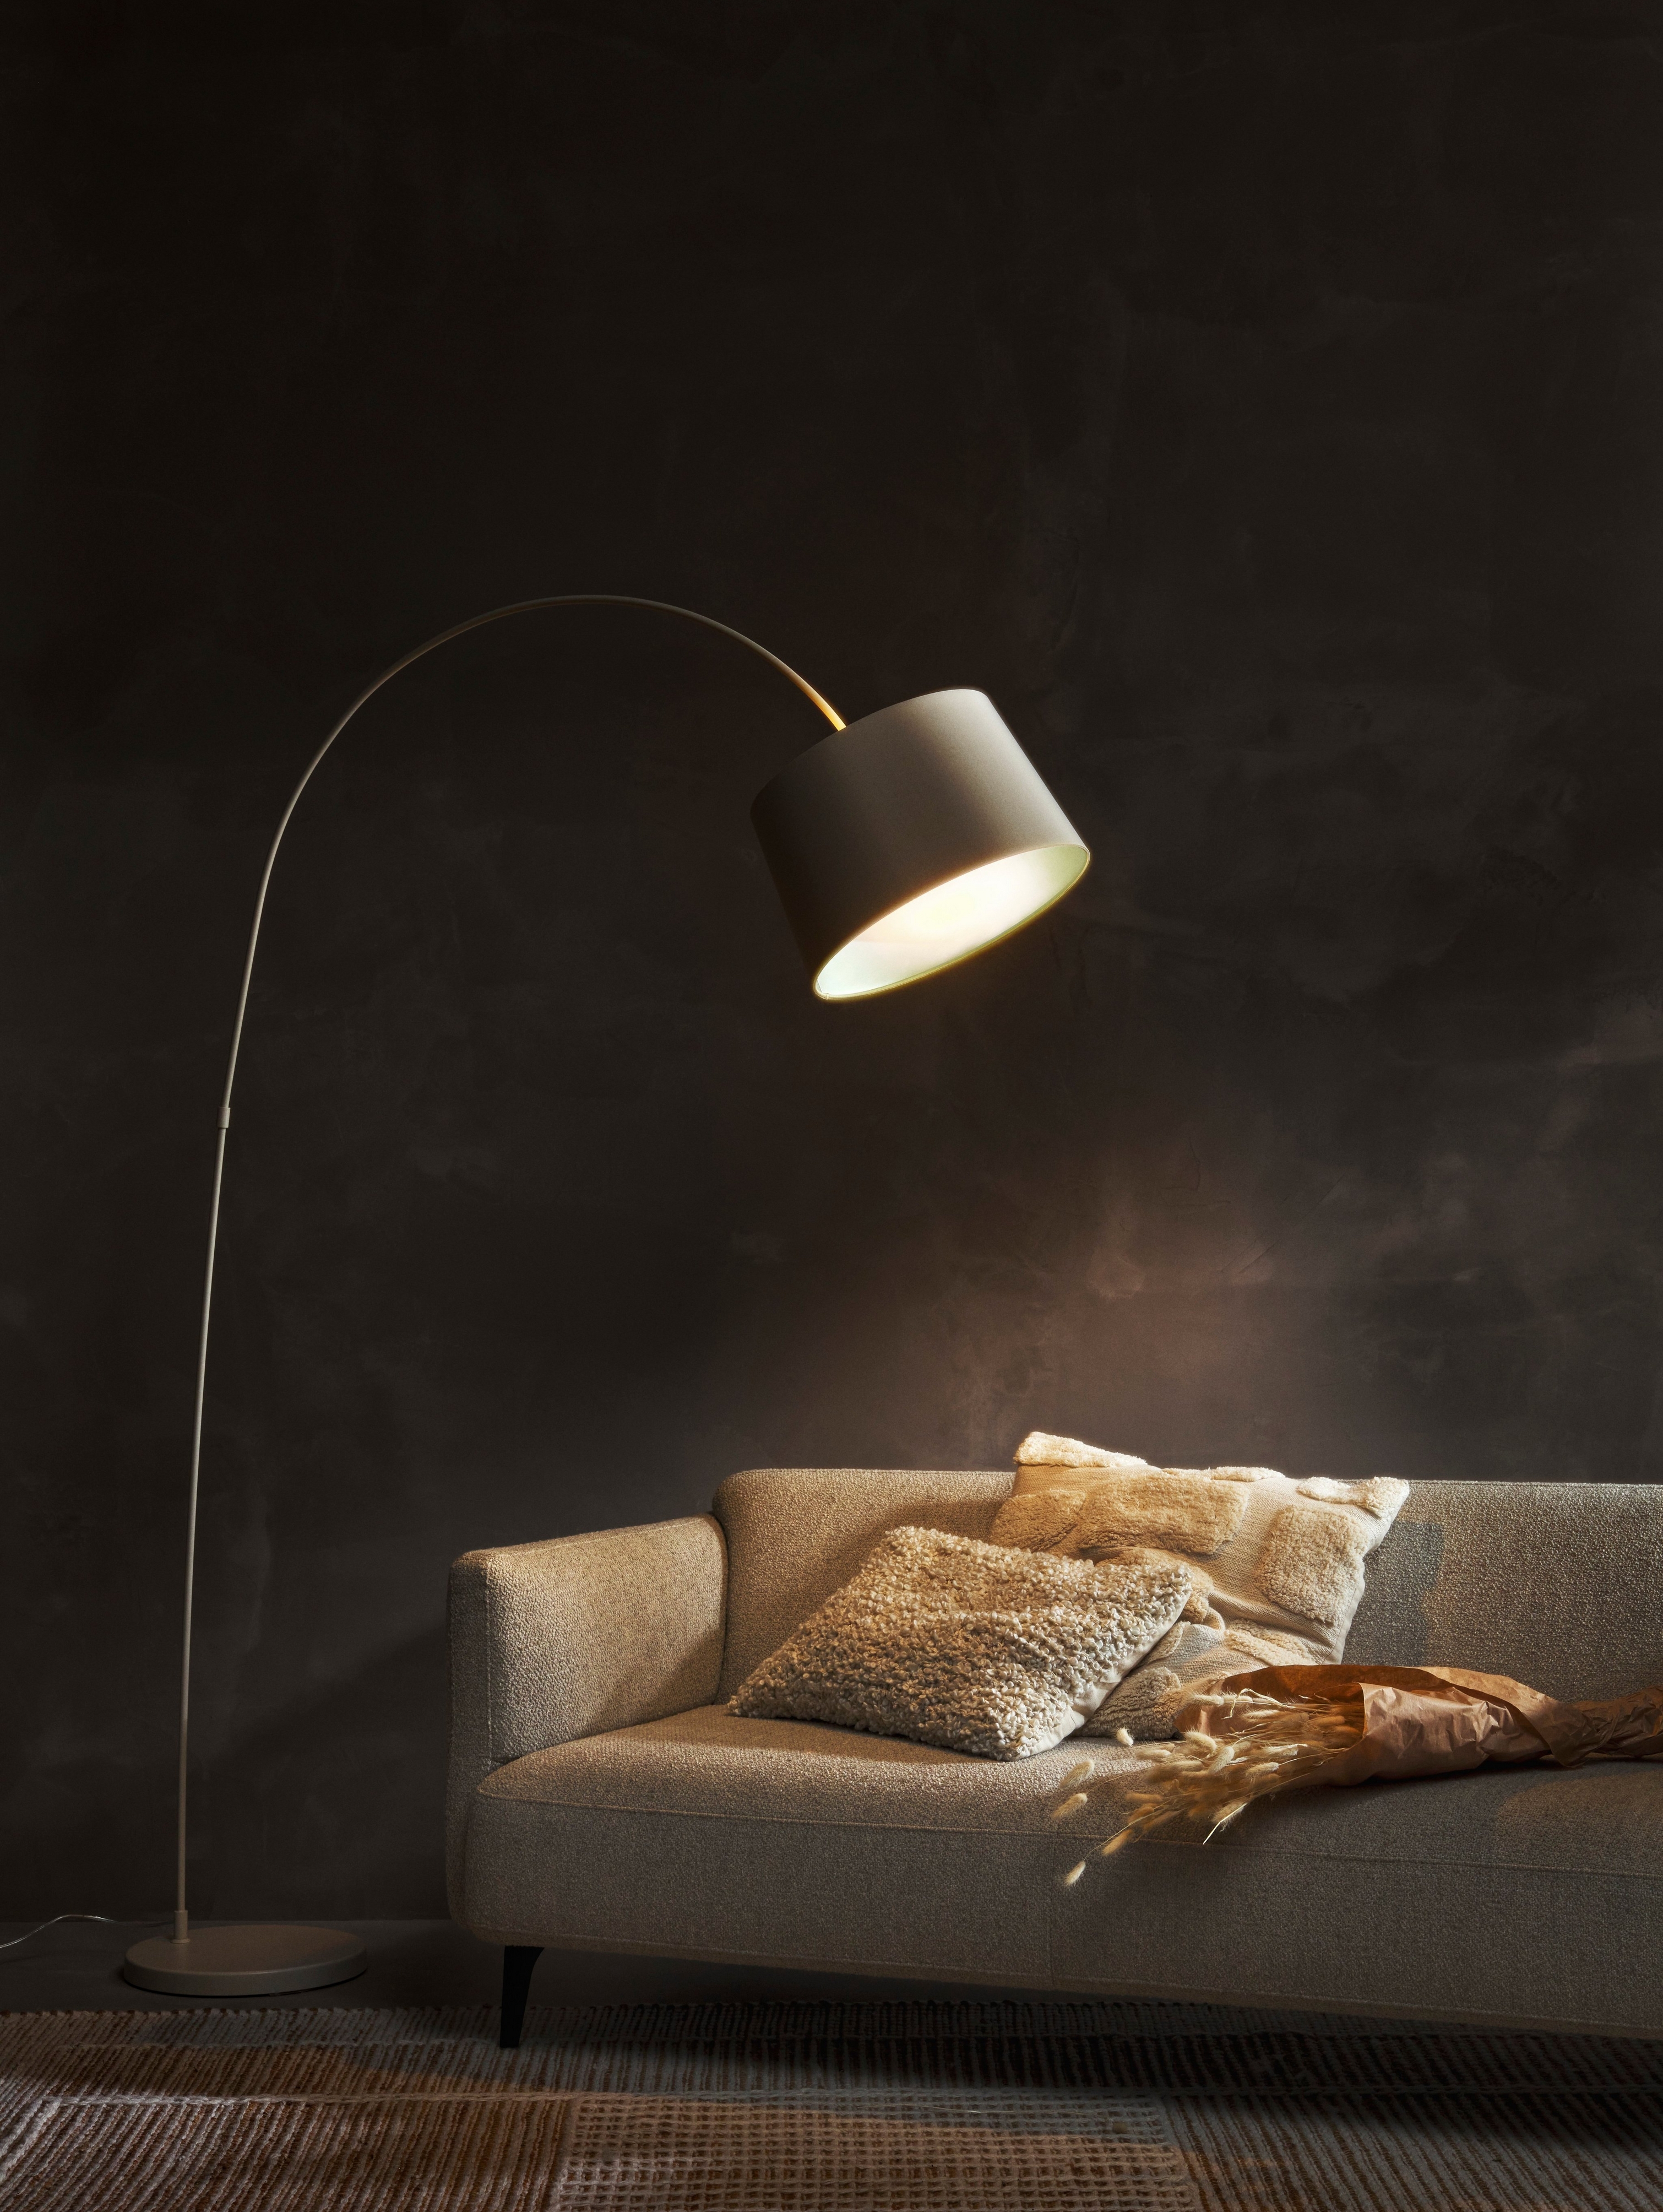 Kuta floor lamp illuminating a grey Modena sofa with pillows and a dark wall background.